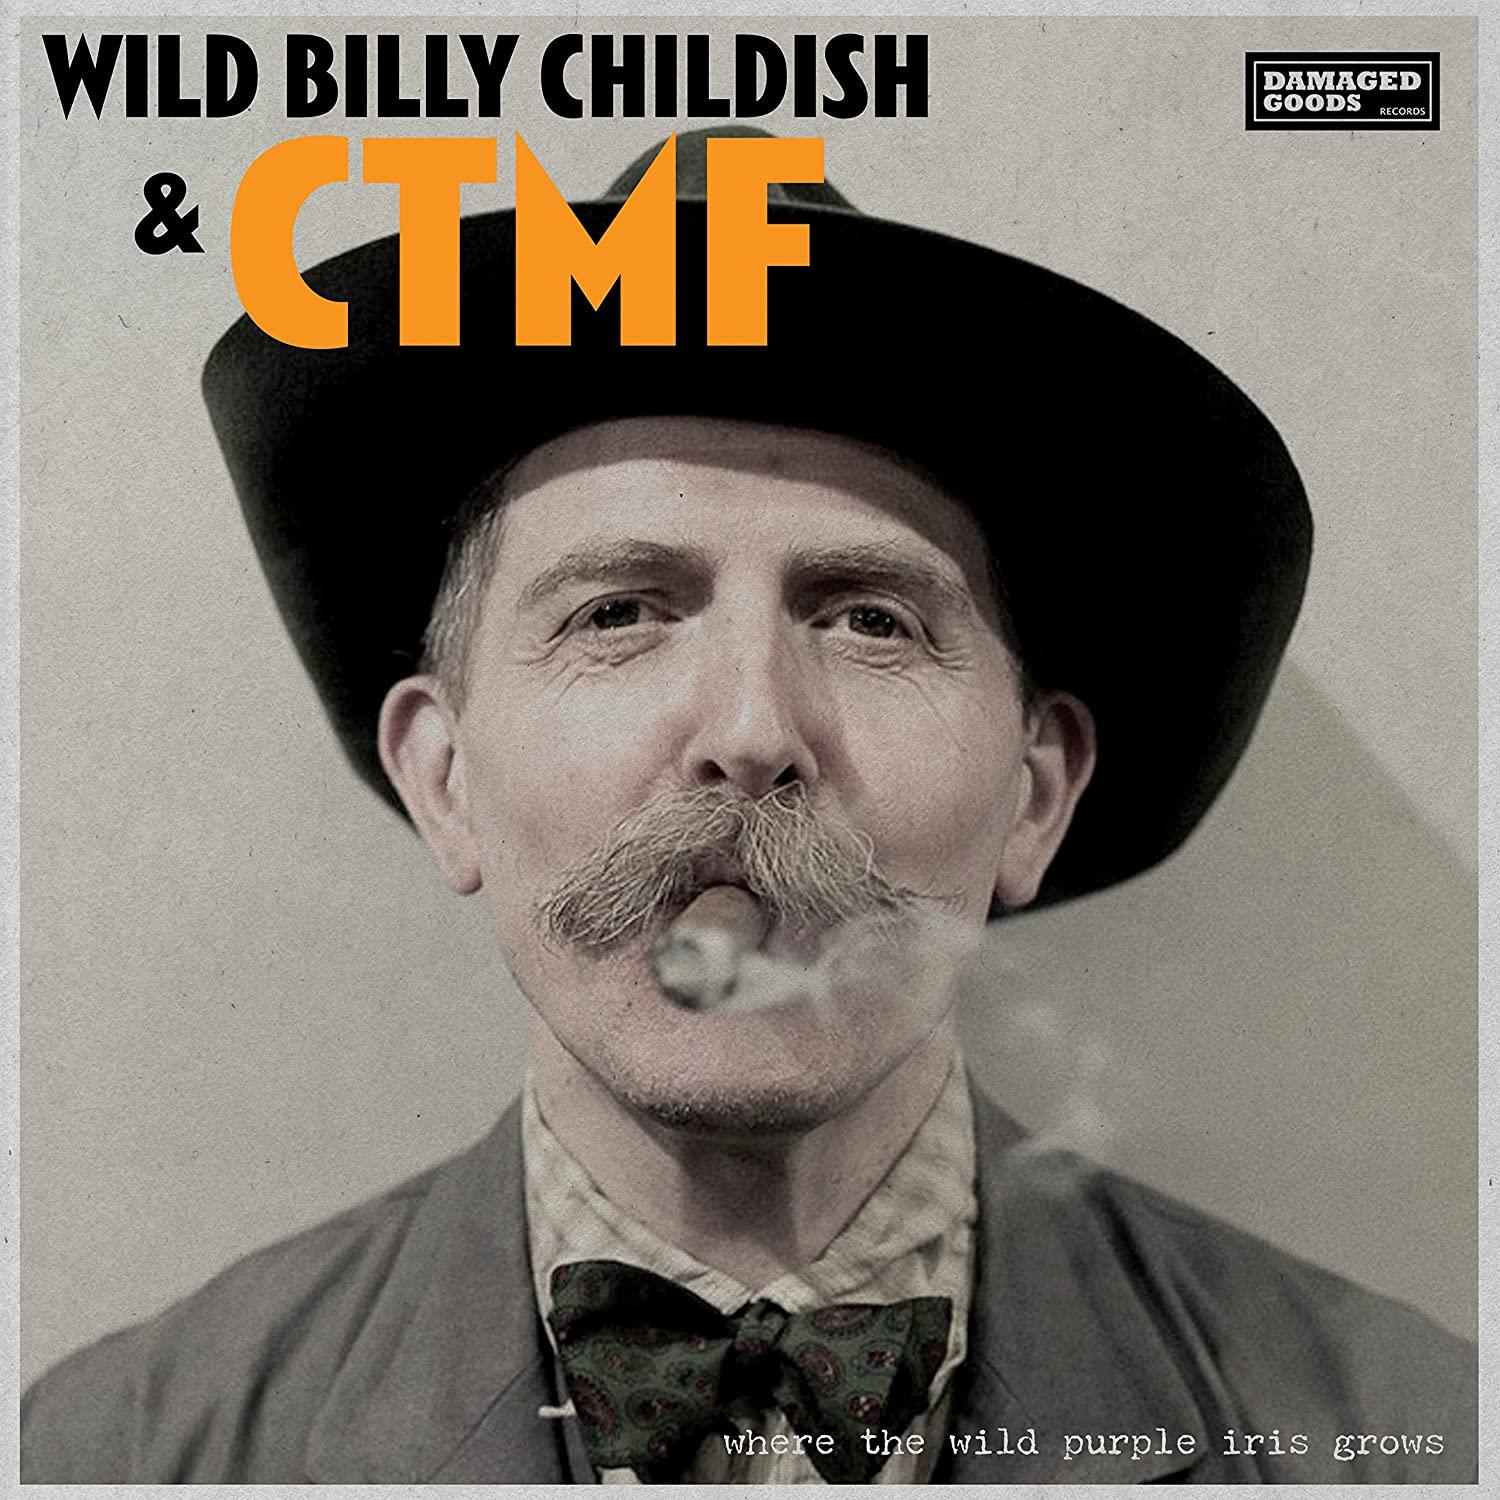 (CD) Wild Where - Billy Childish Wild & - Iris Grows Purple The CTMF